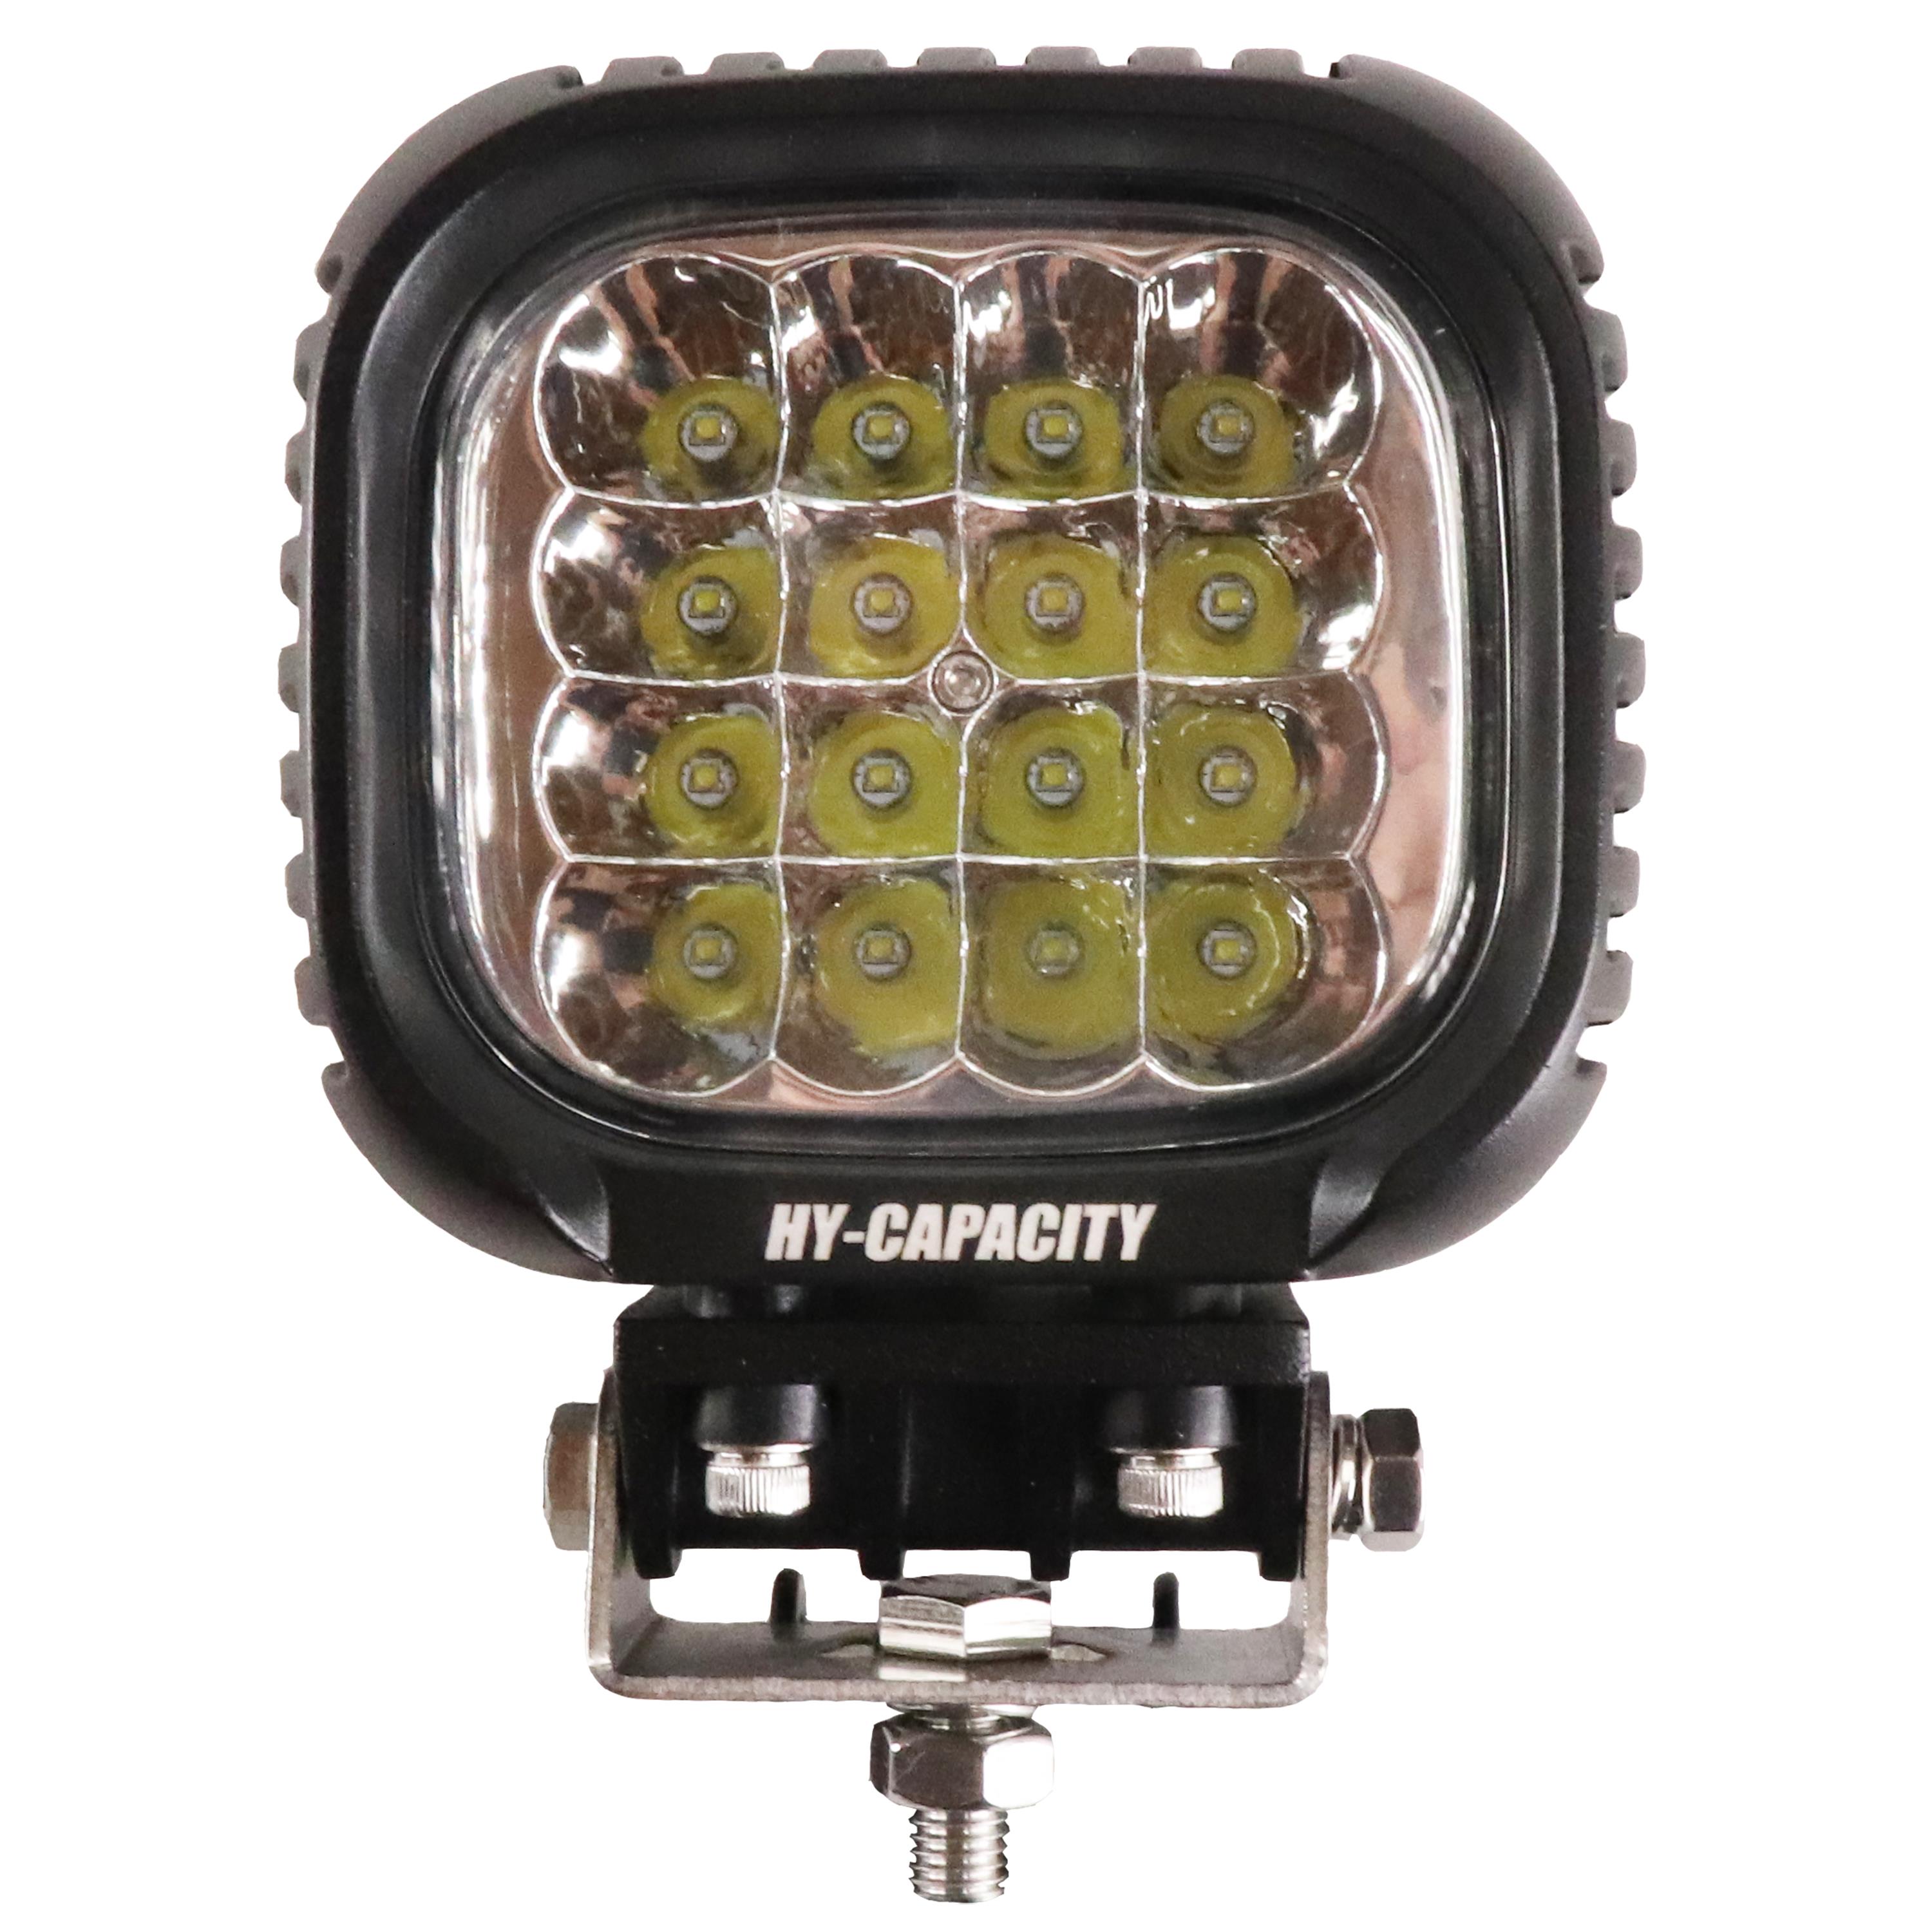 CREE LED Spot Beam Light, 3360 Lumens